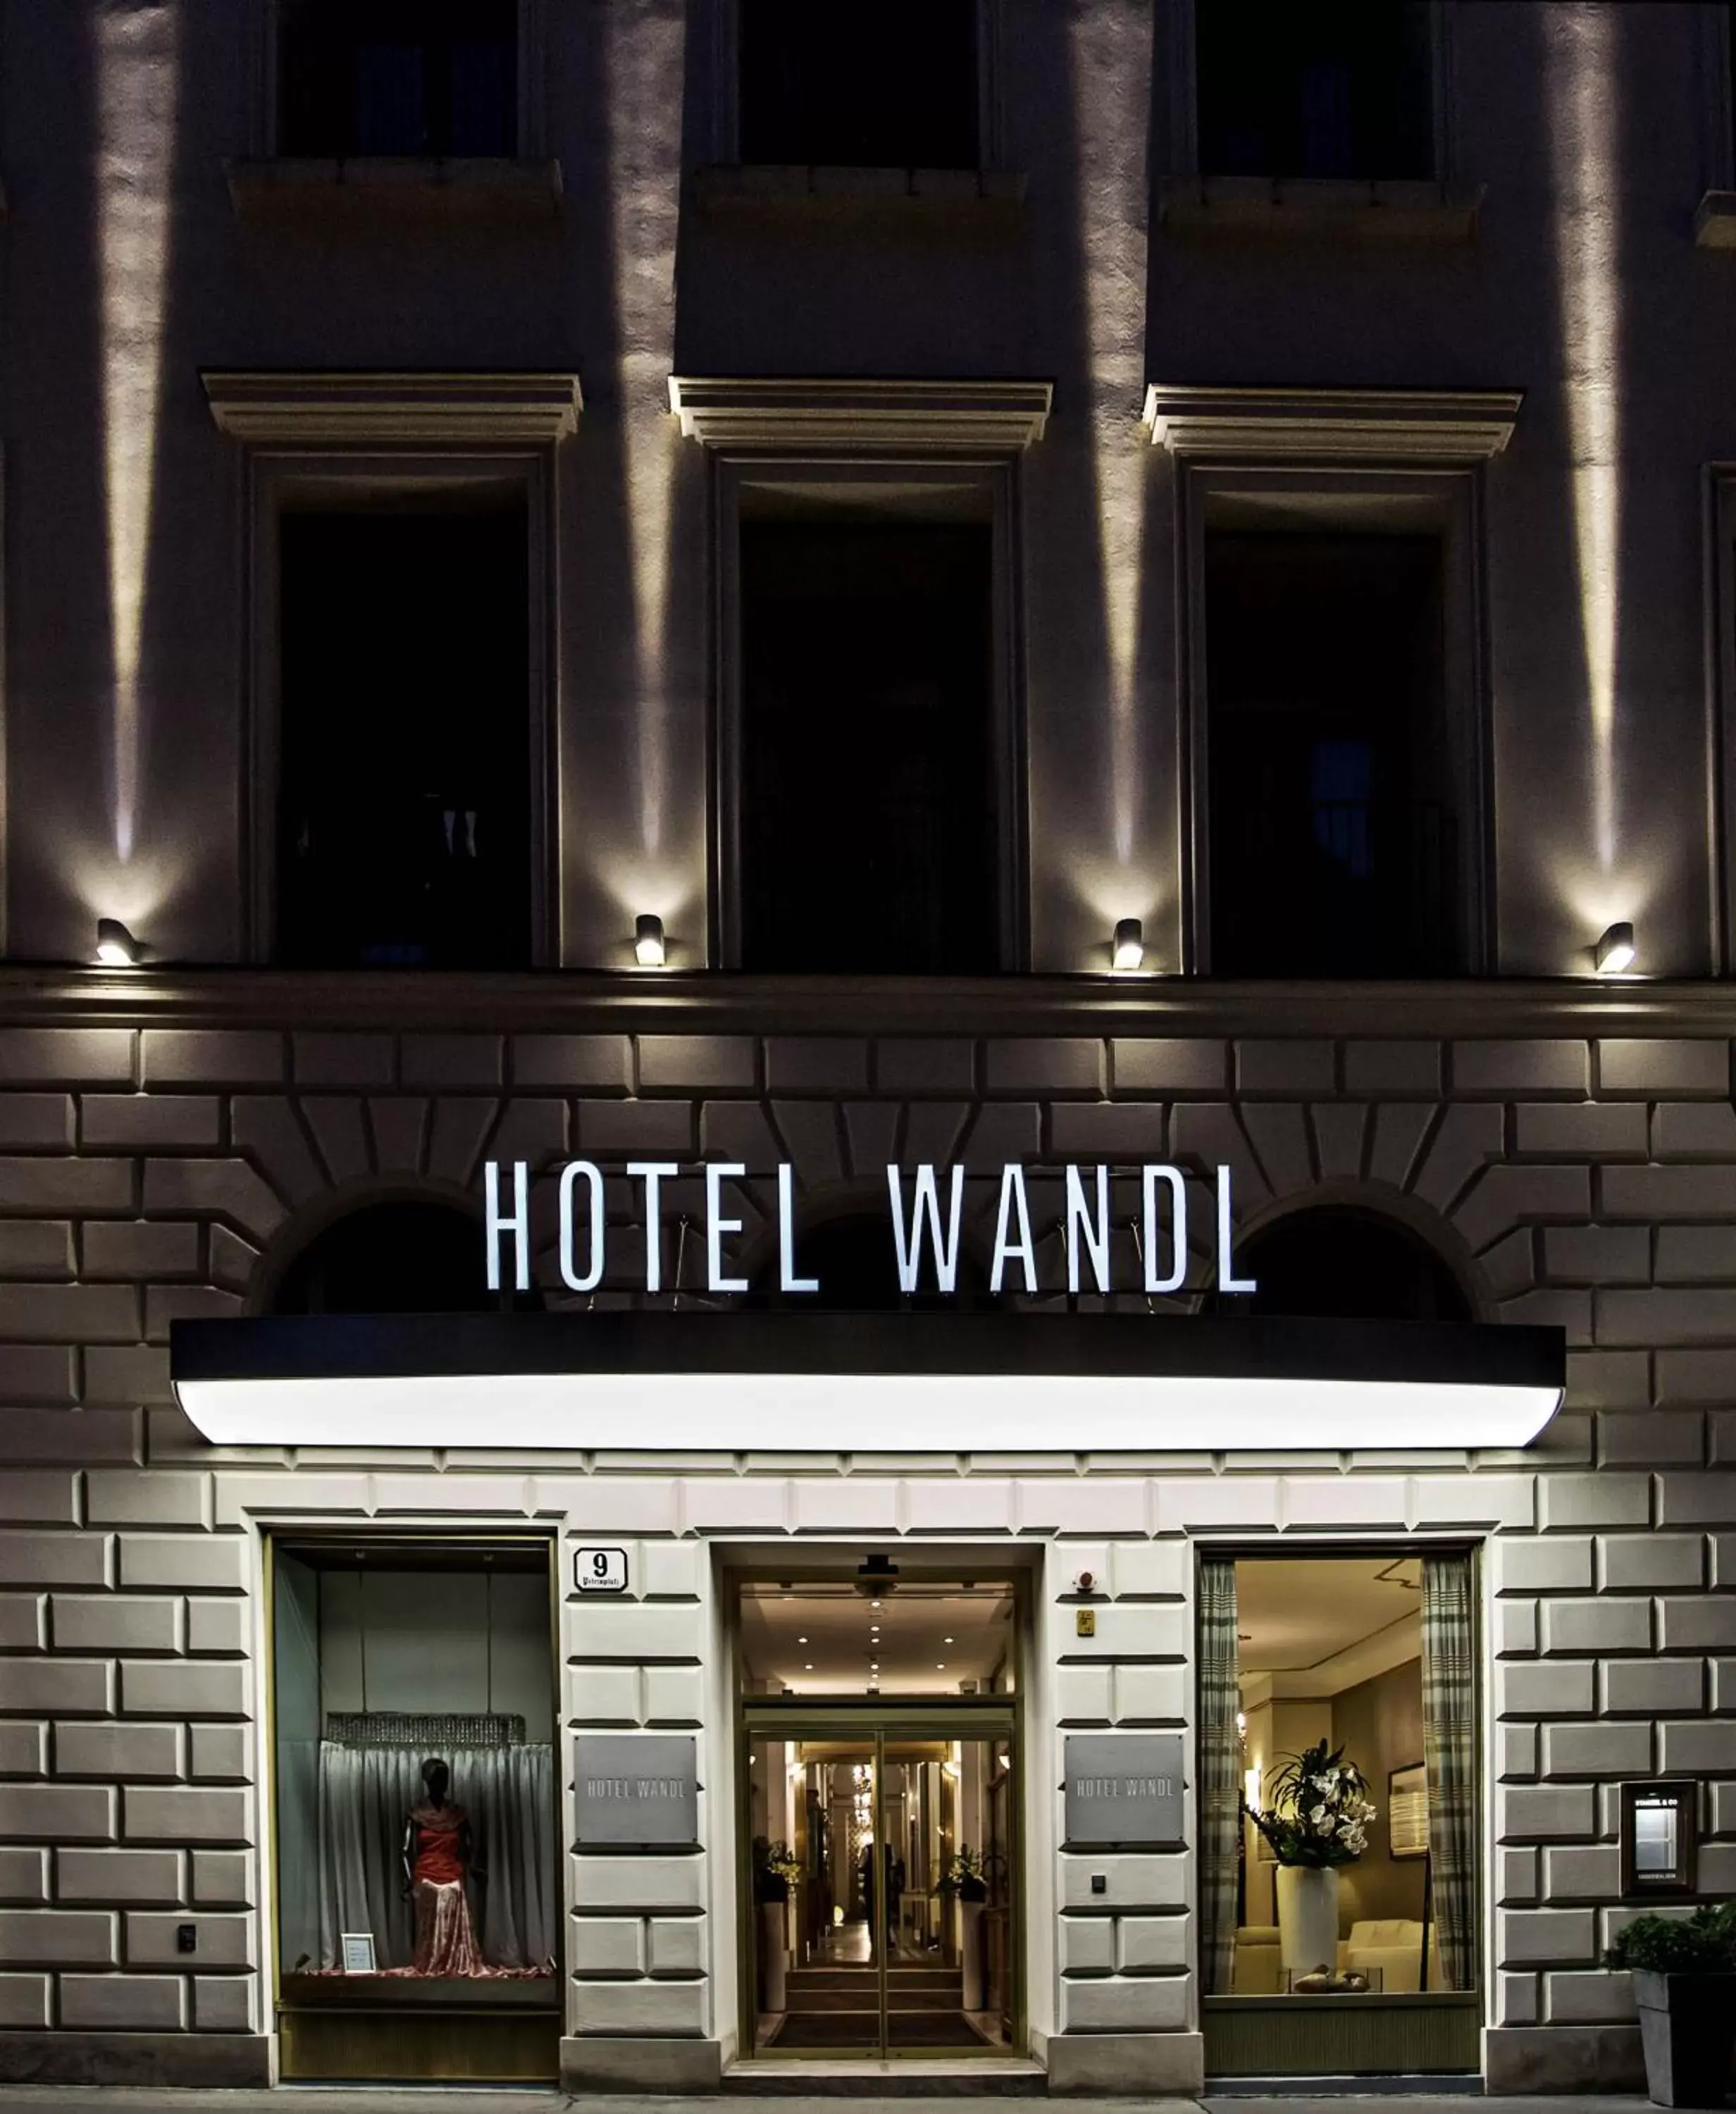 Facade/entrance in Hotel Wandl